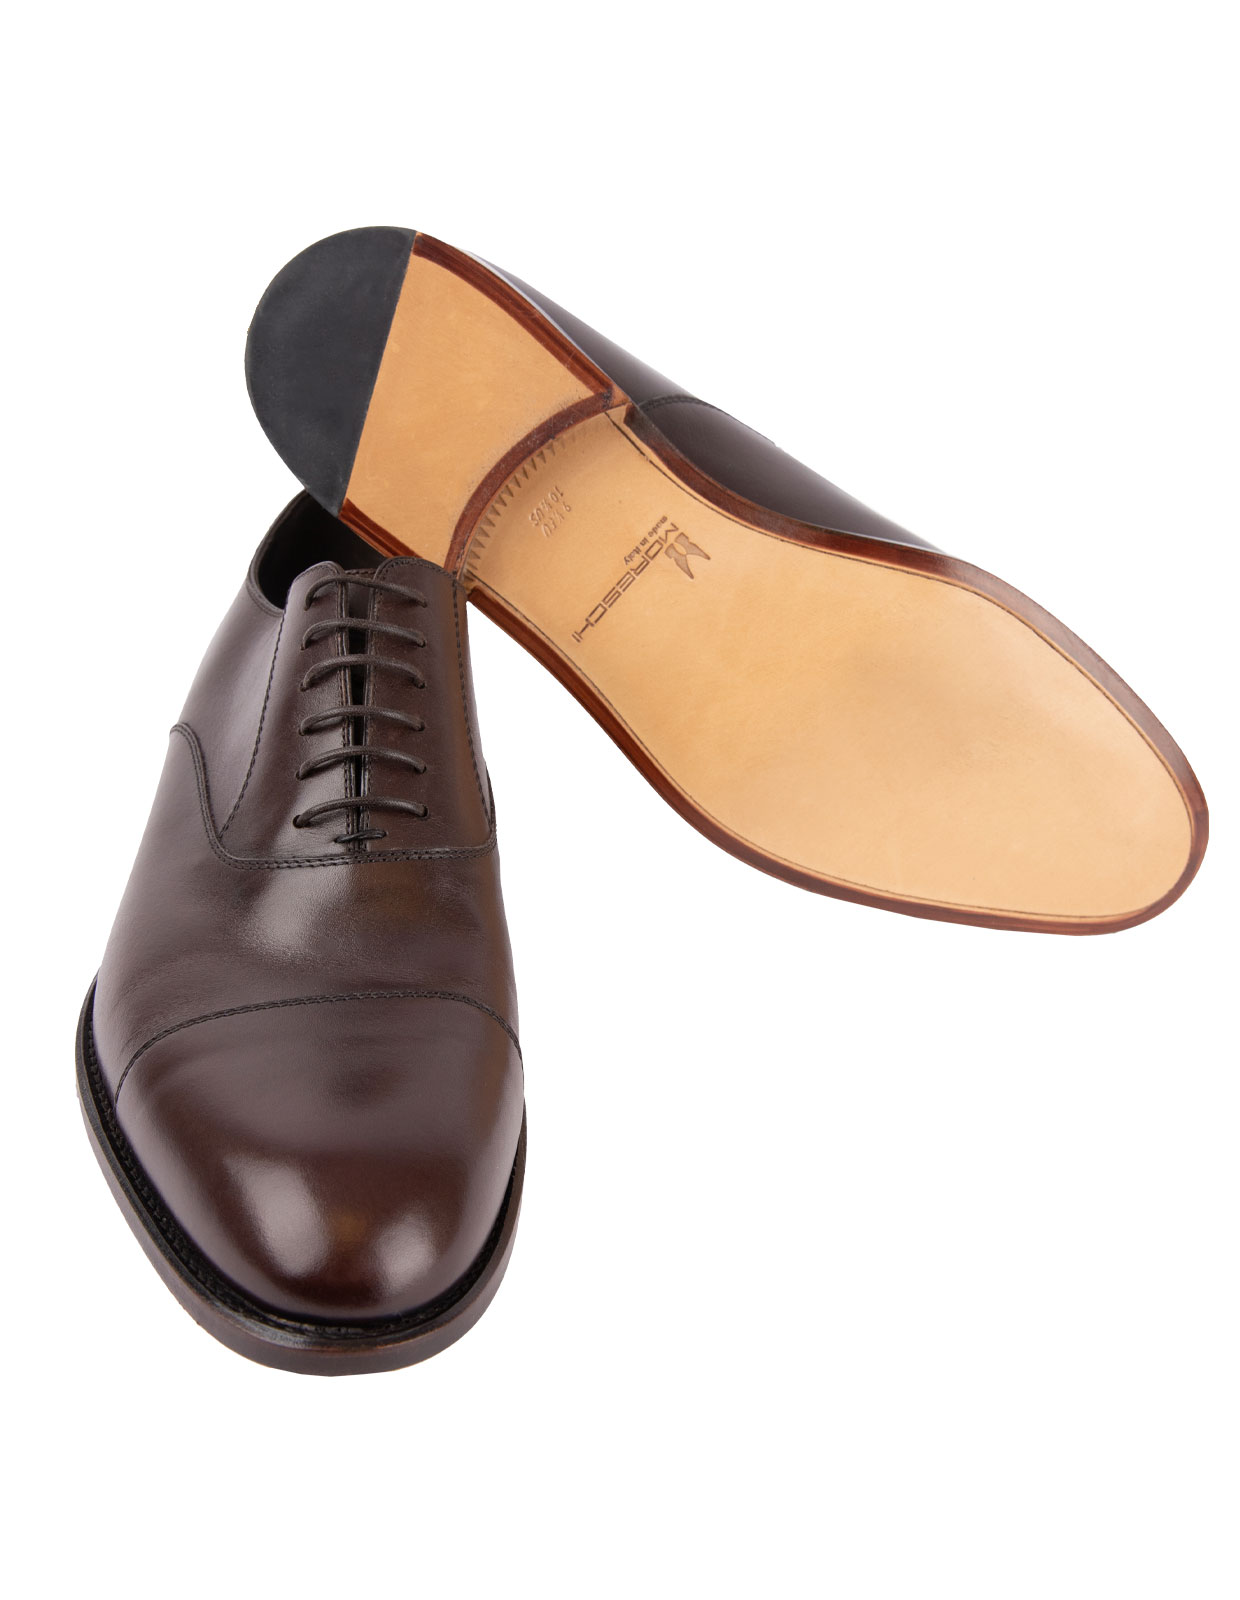 New York Oxford Shoes Calfskin Brown Stl 8.5